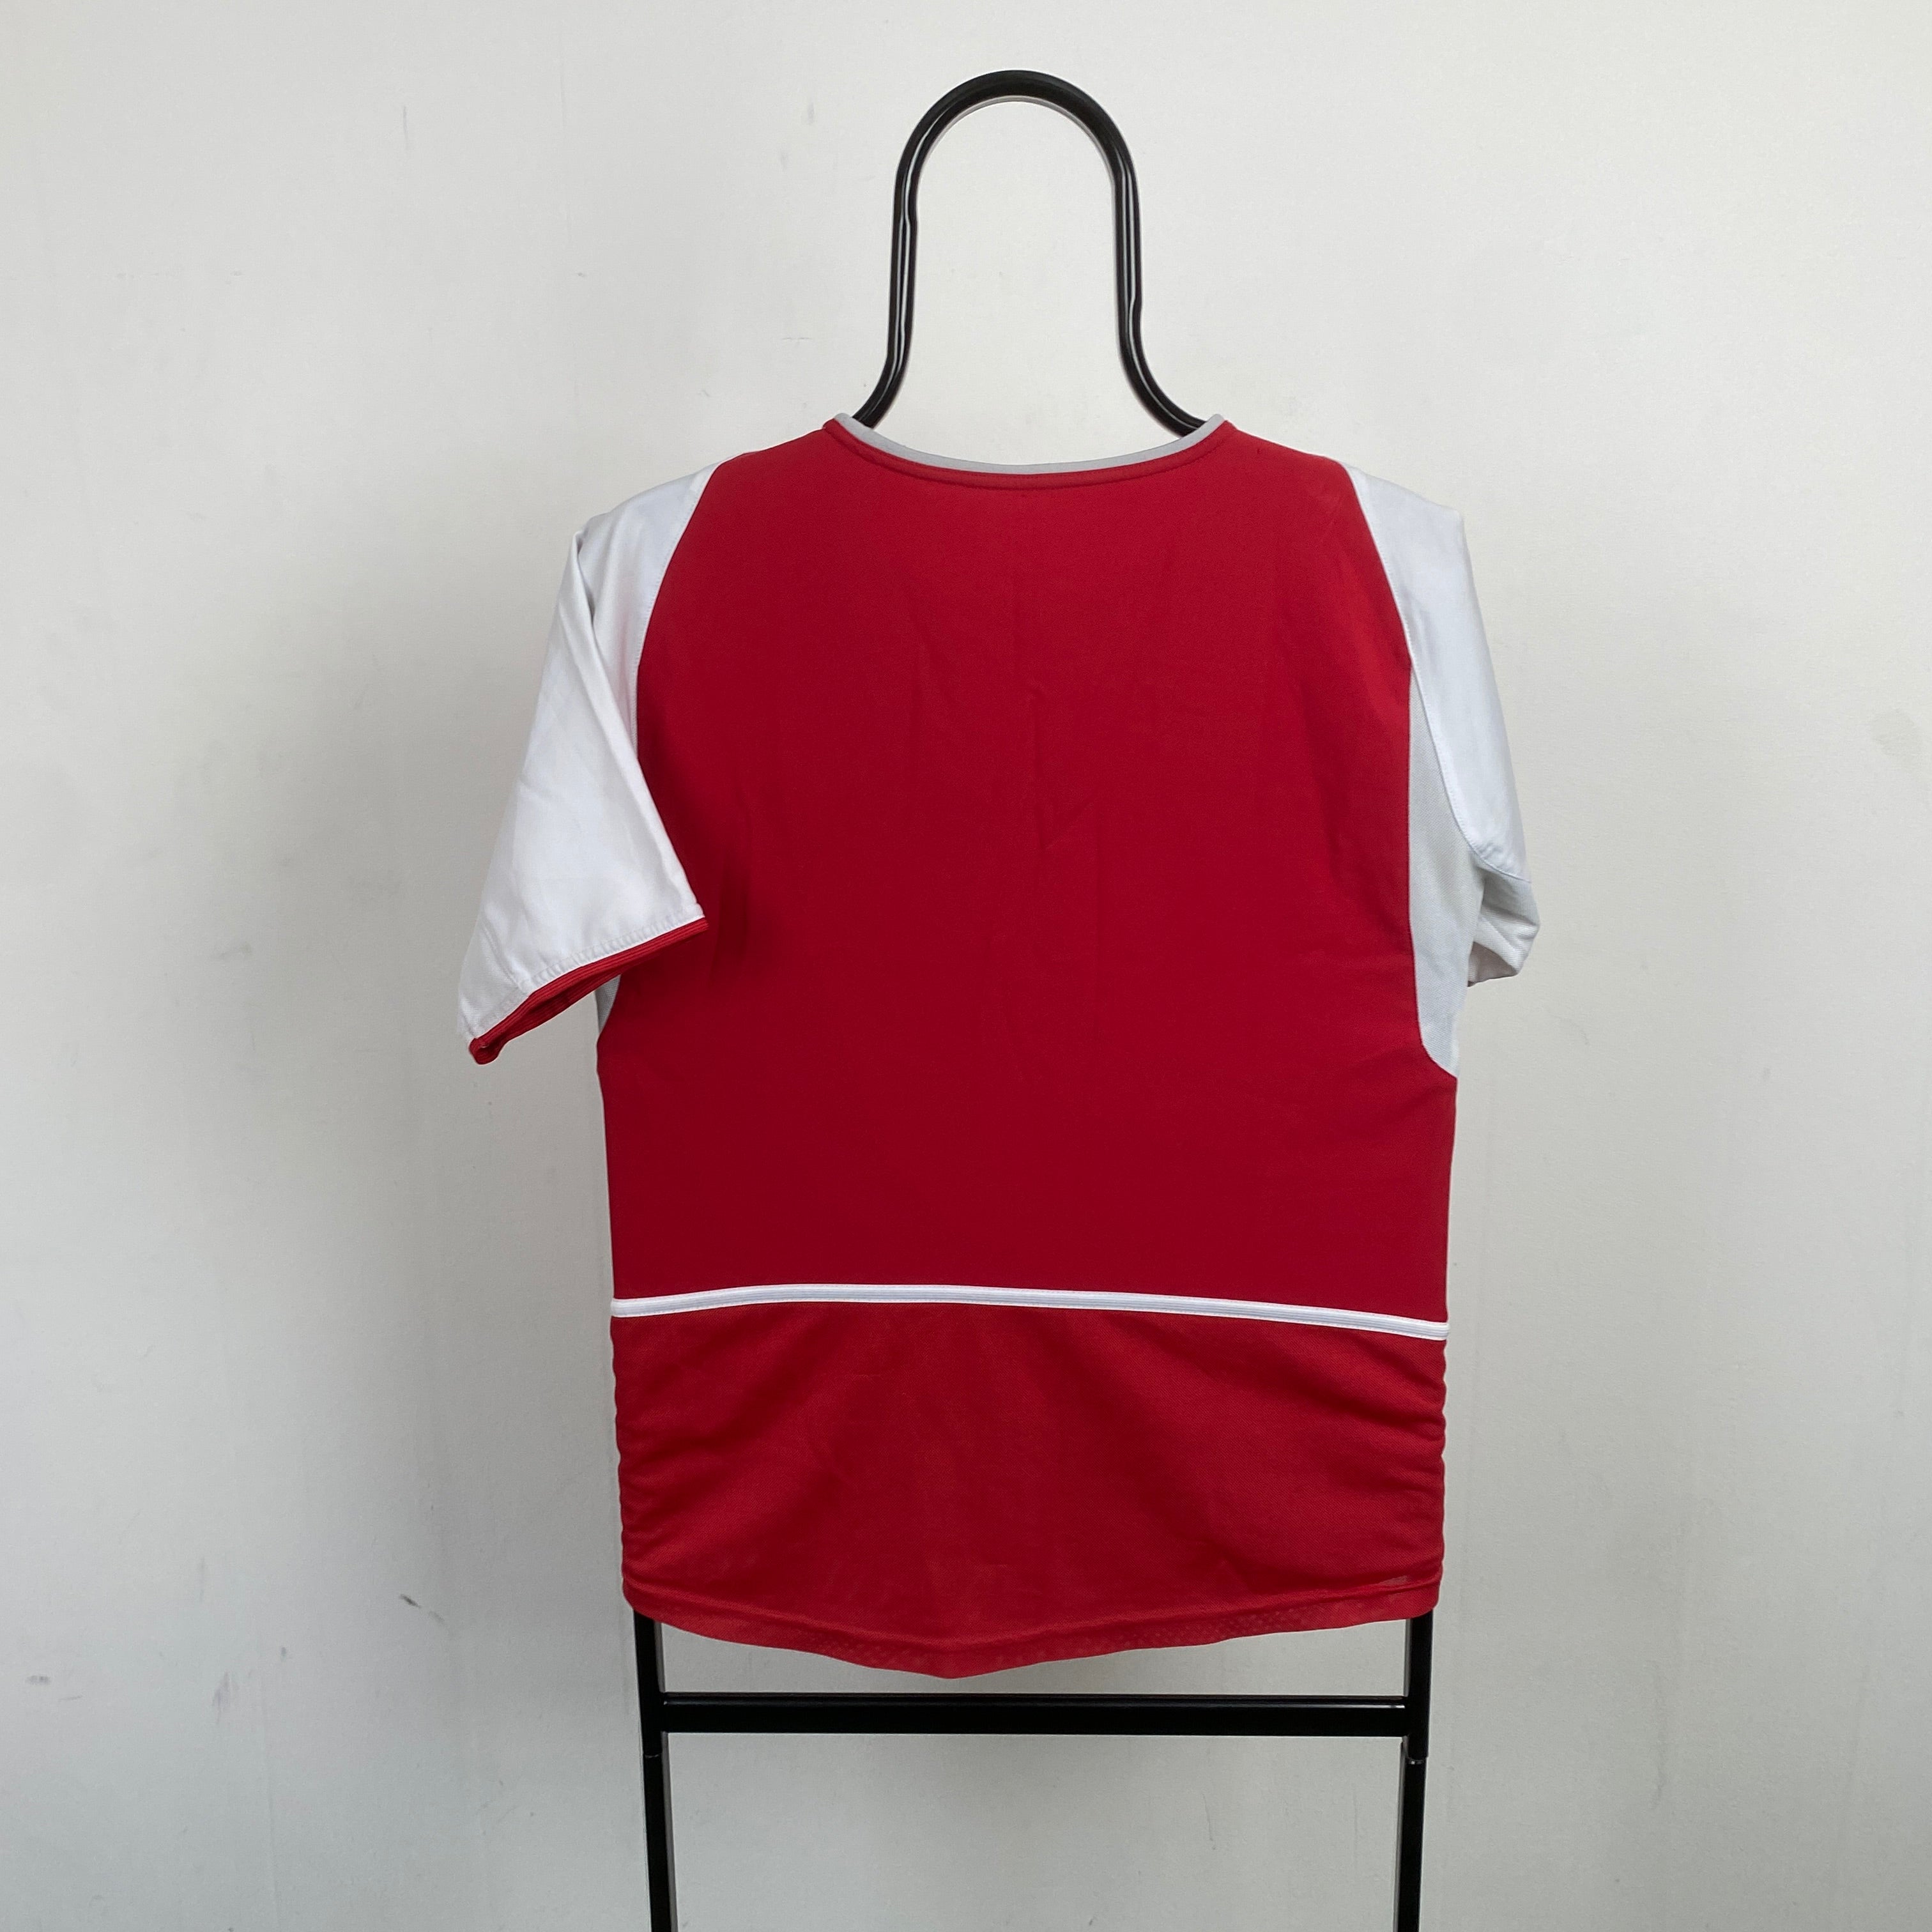 00s Nike Arsenal Football Shirt T-Shirt Red XS